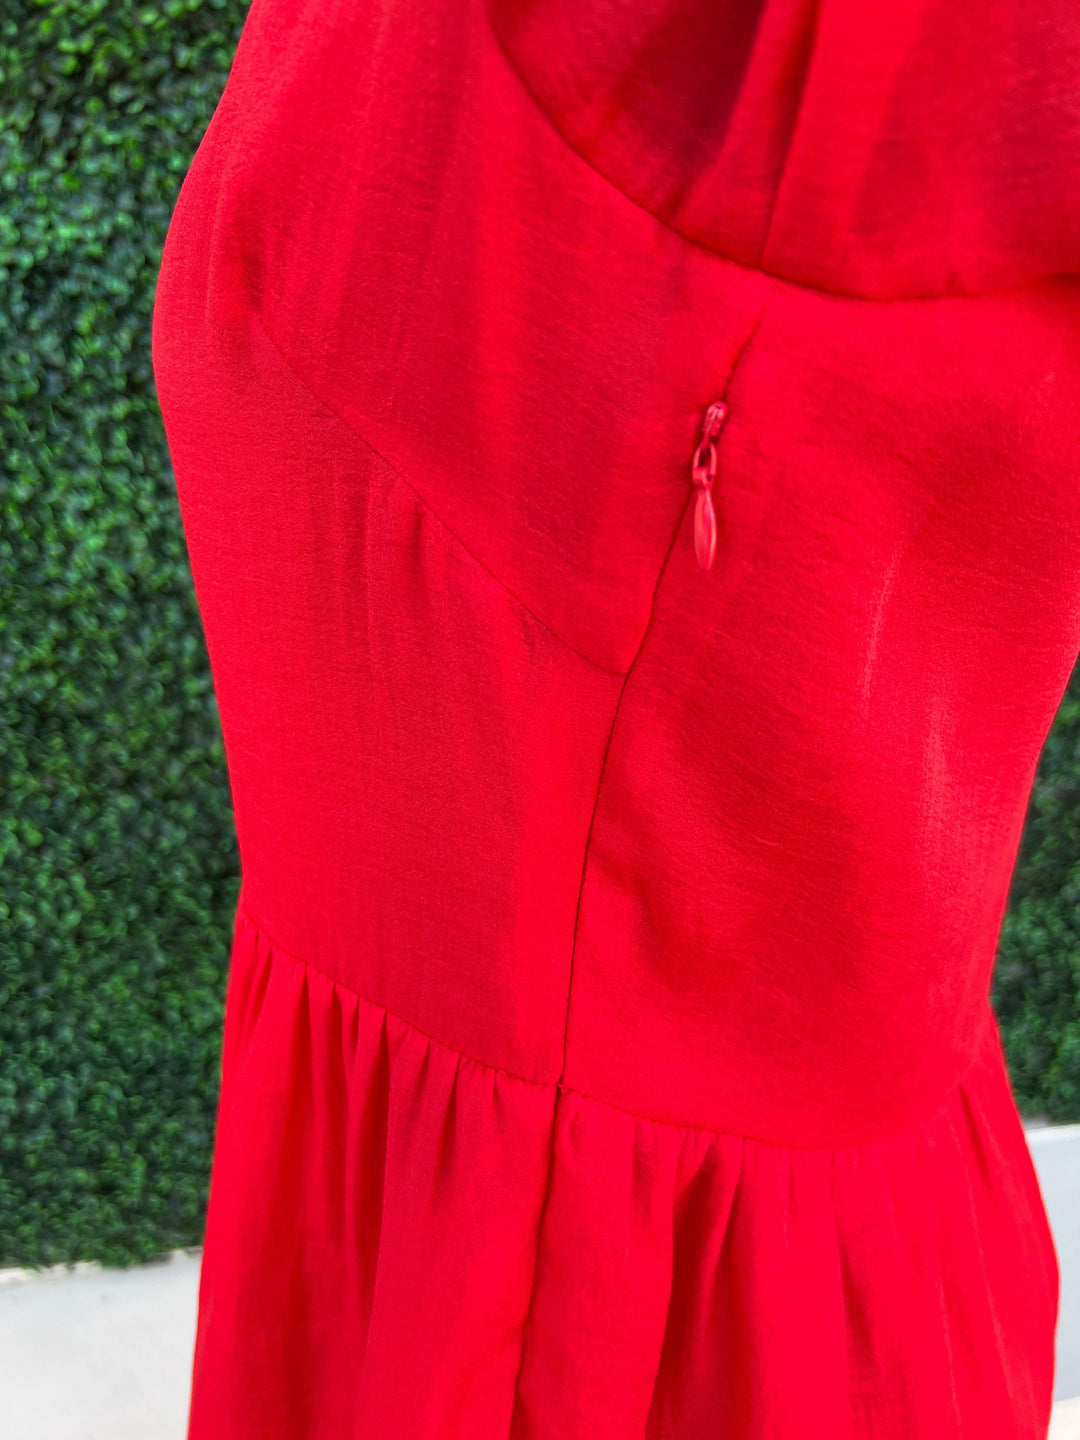 Jade joy joy brand red dress boutique womens clothing online houston 